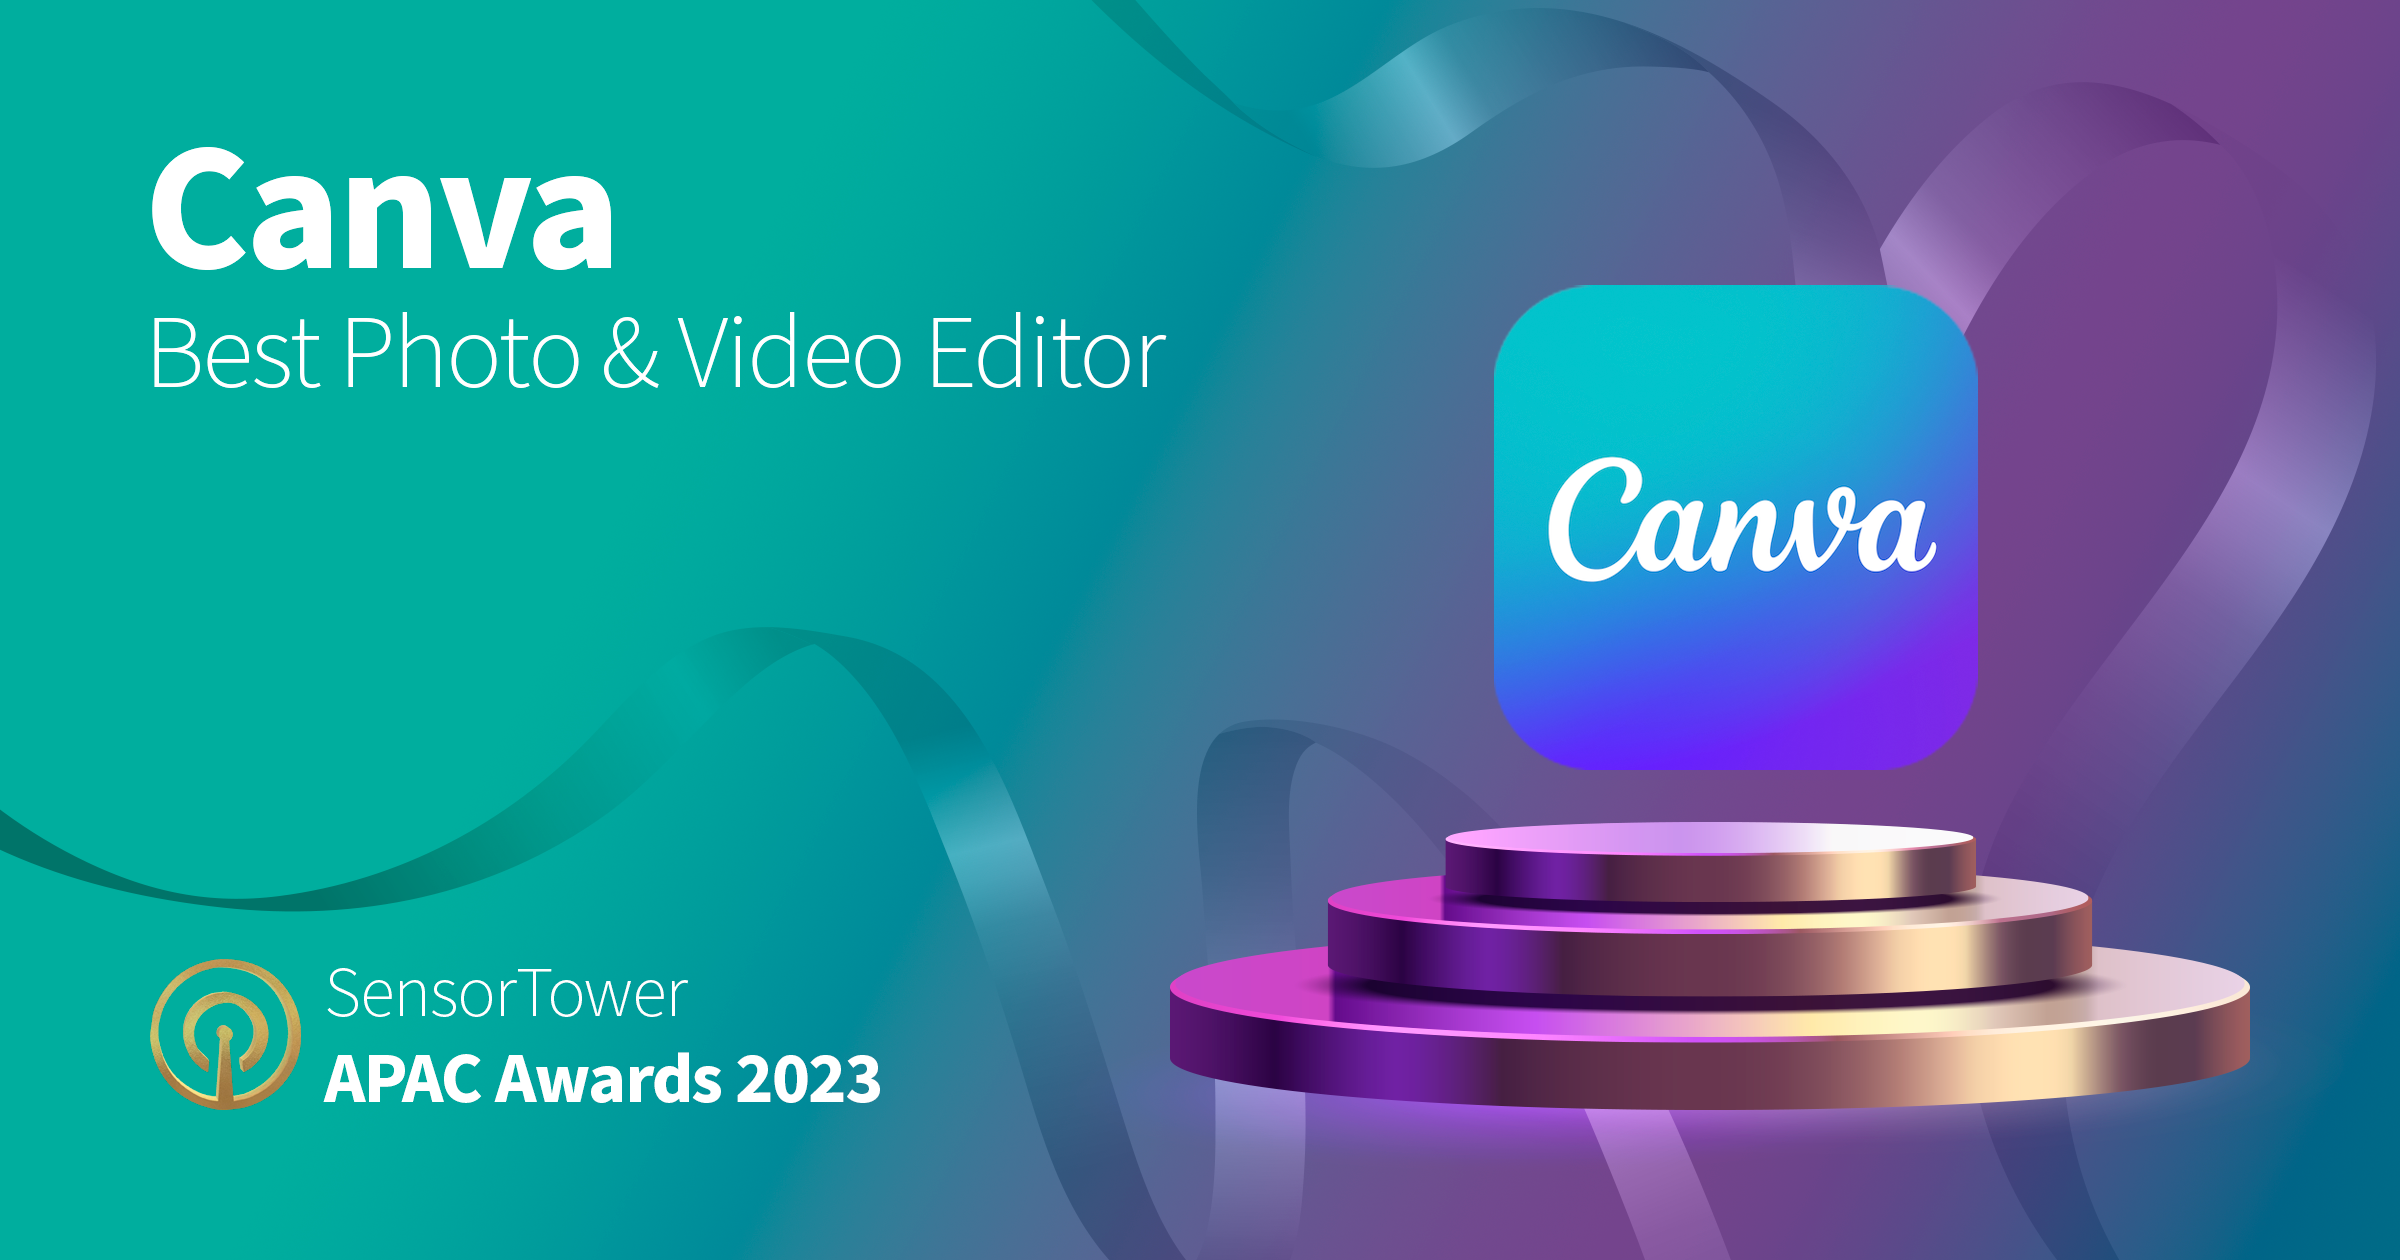 Canva (Best Photo & Video Editor)